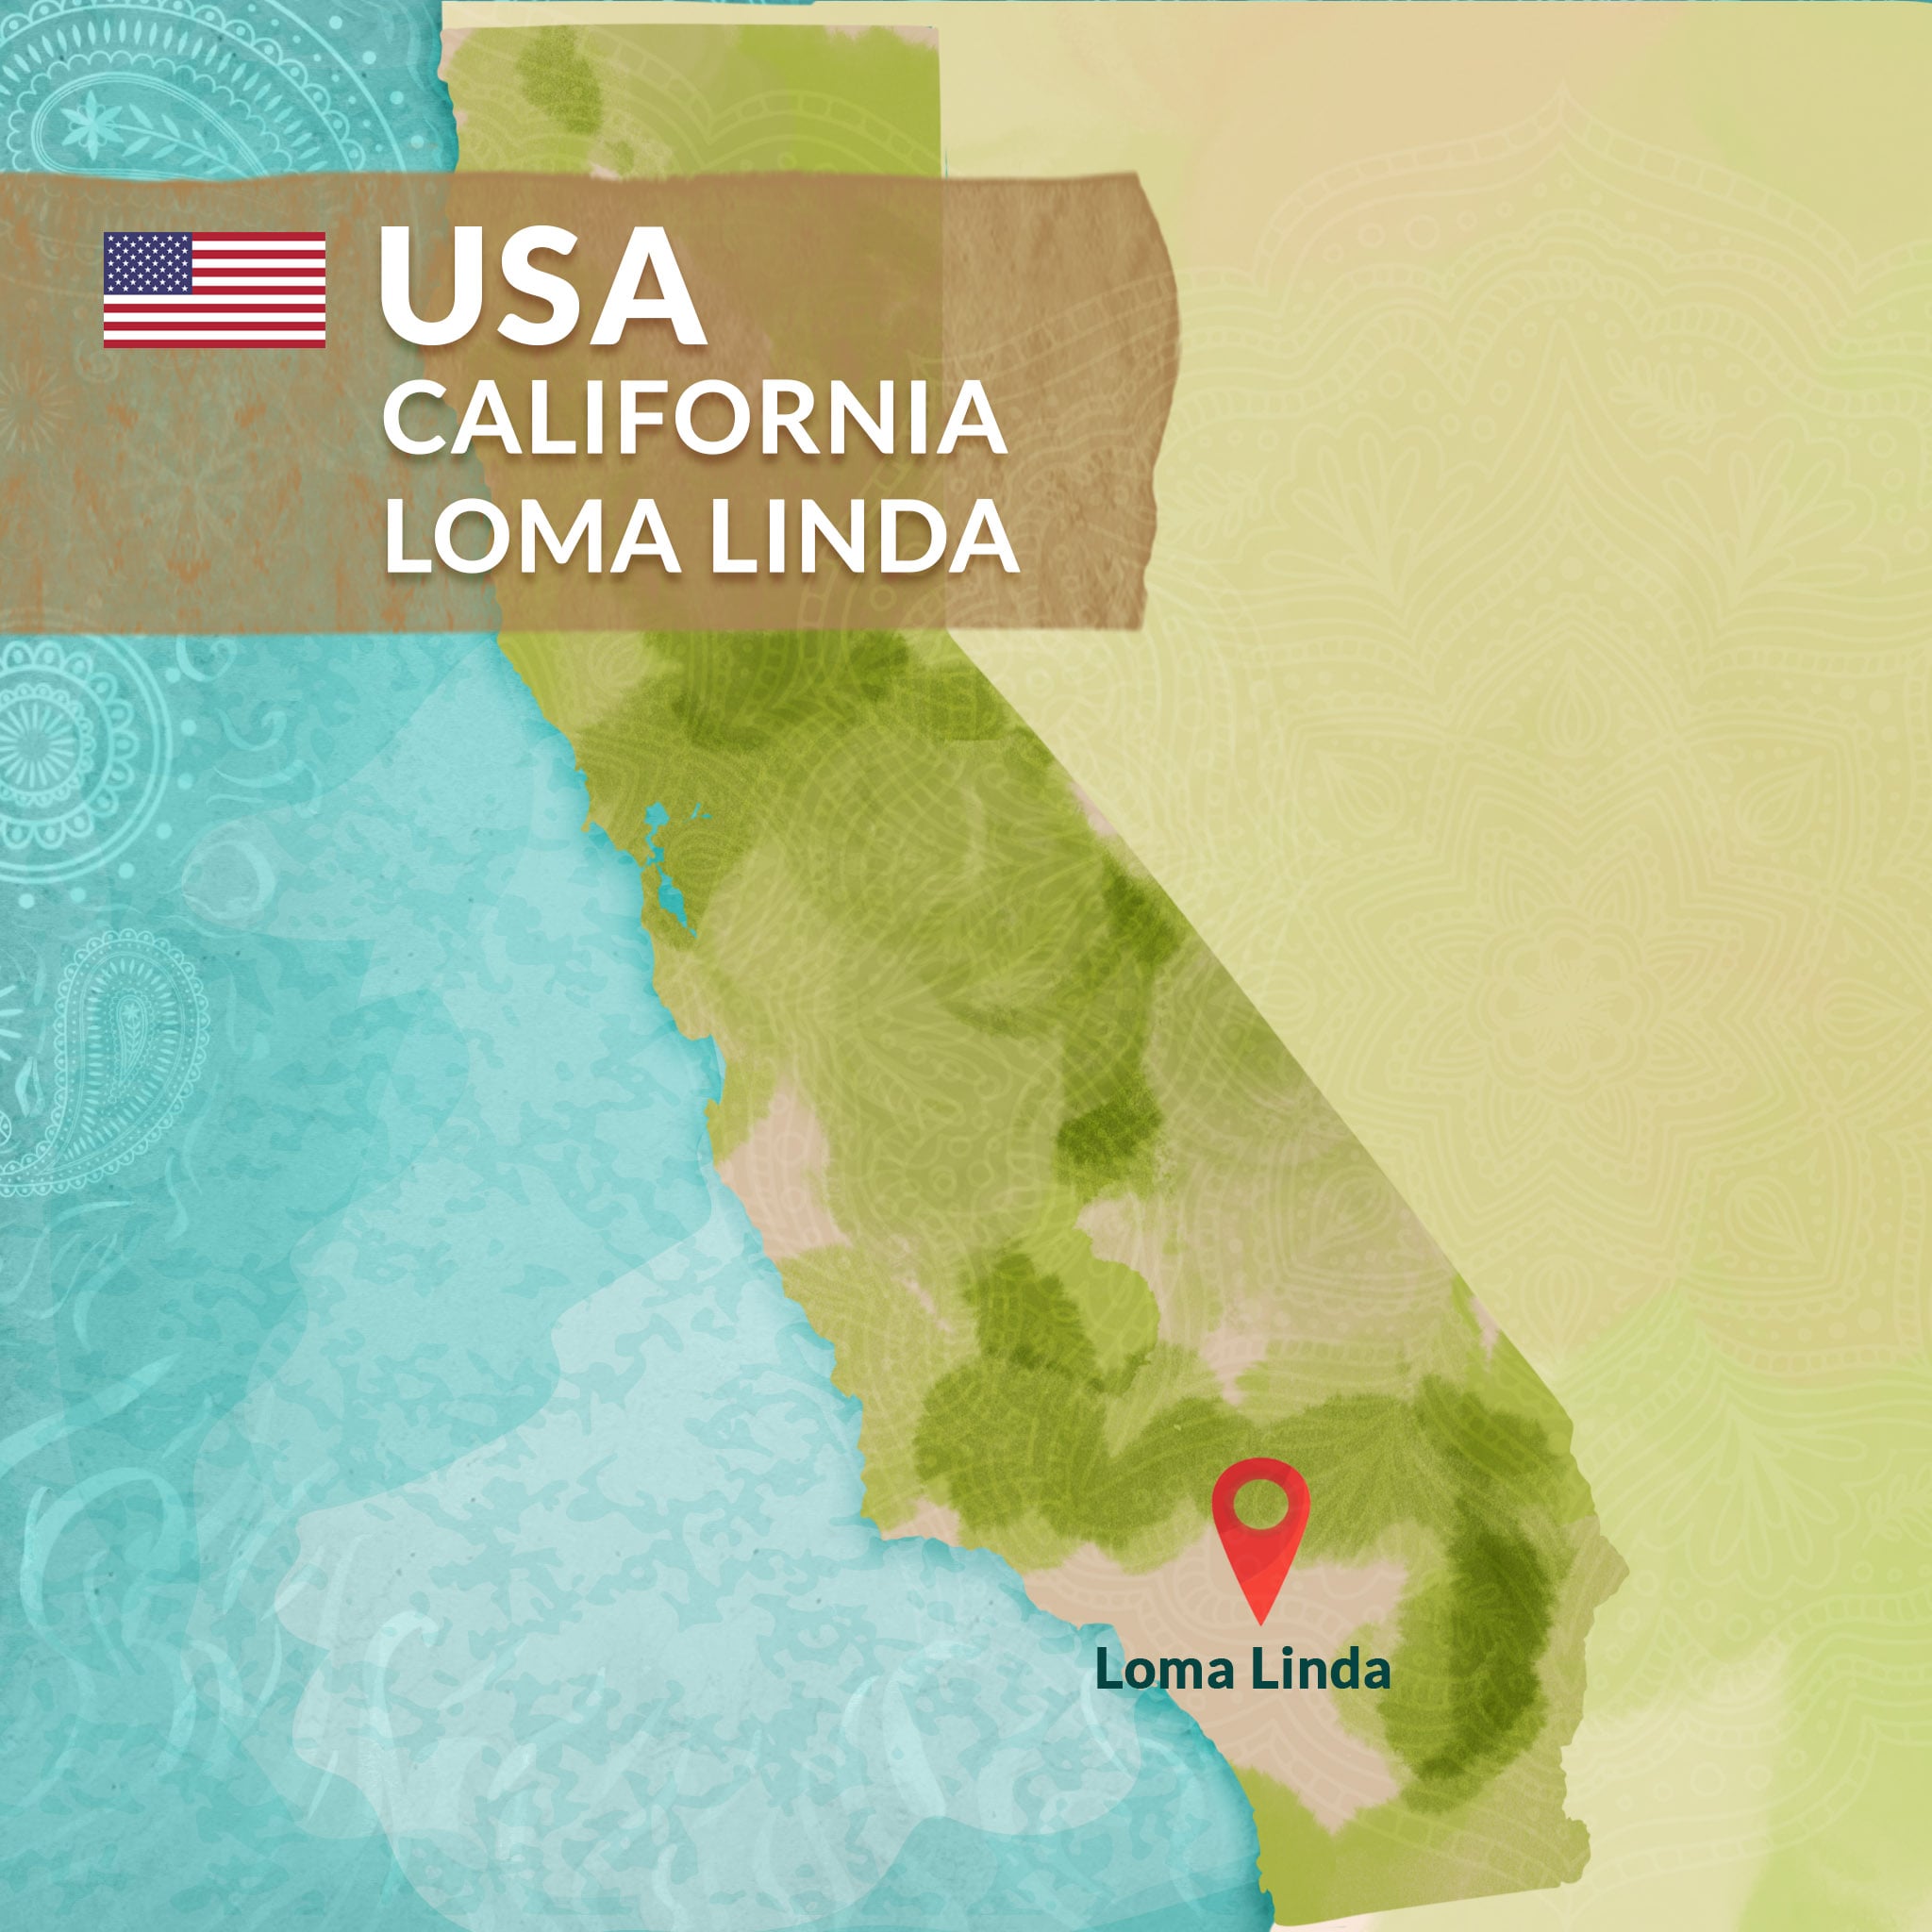 Blue Zones on map - Loma Linda, California, USA